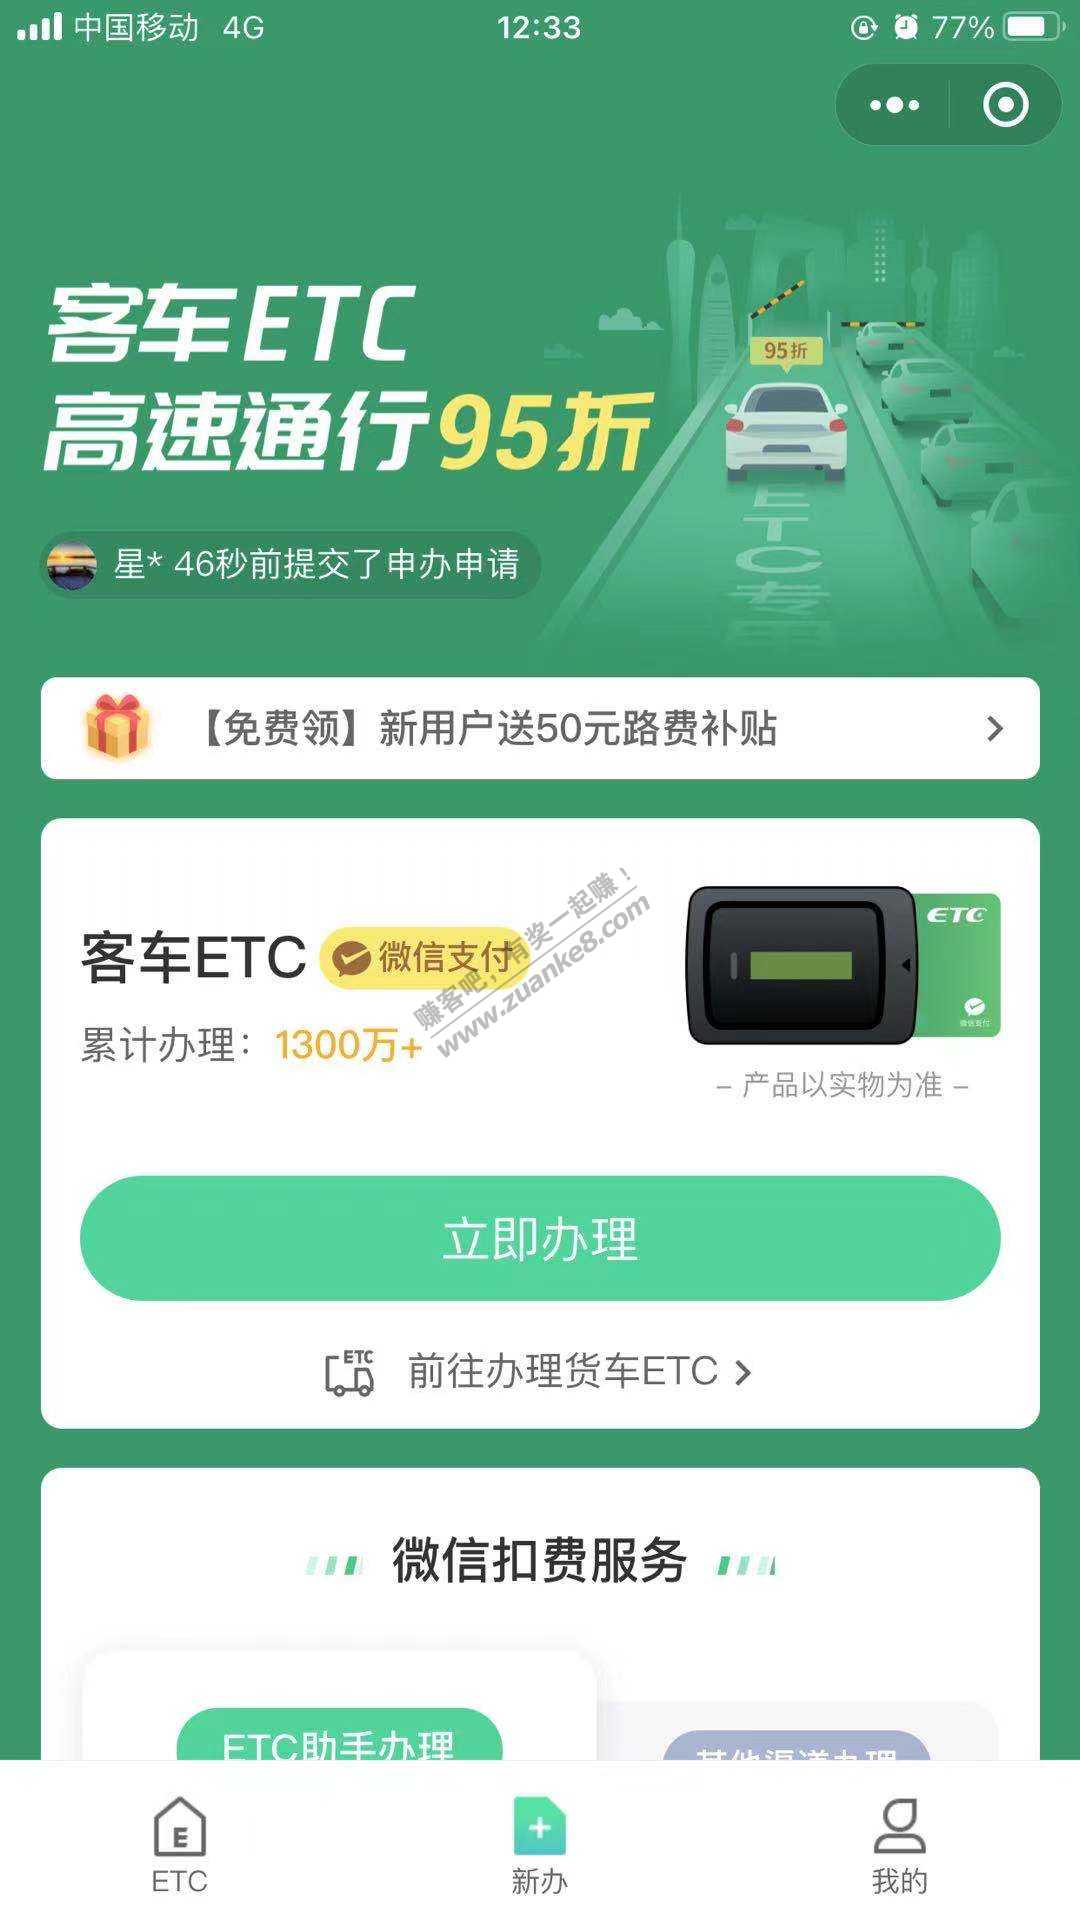 V.x小程序ETC助手新用户送50元路费补贴-惠小助(52huixz.com)